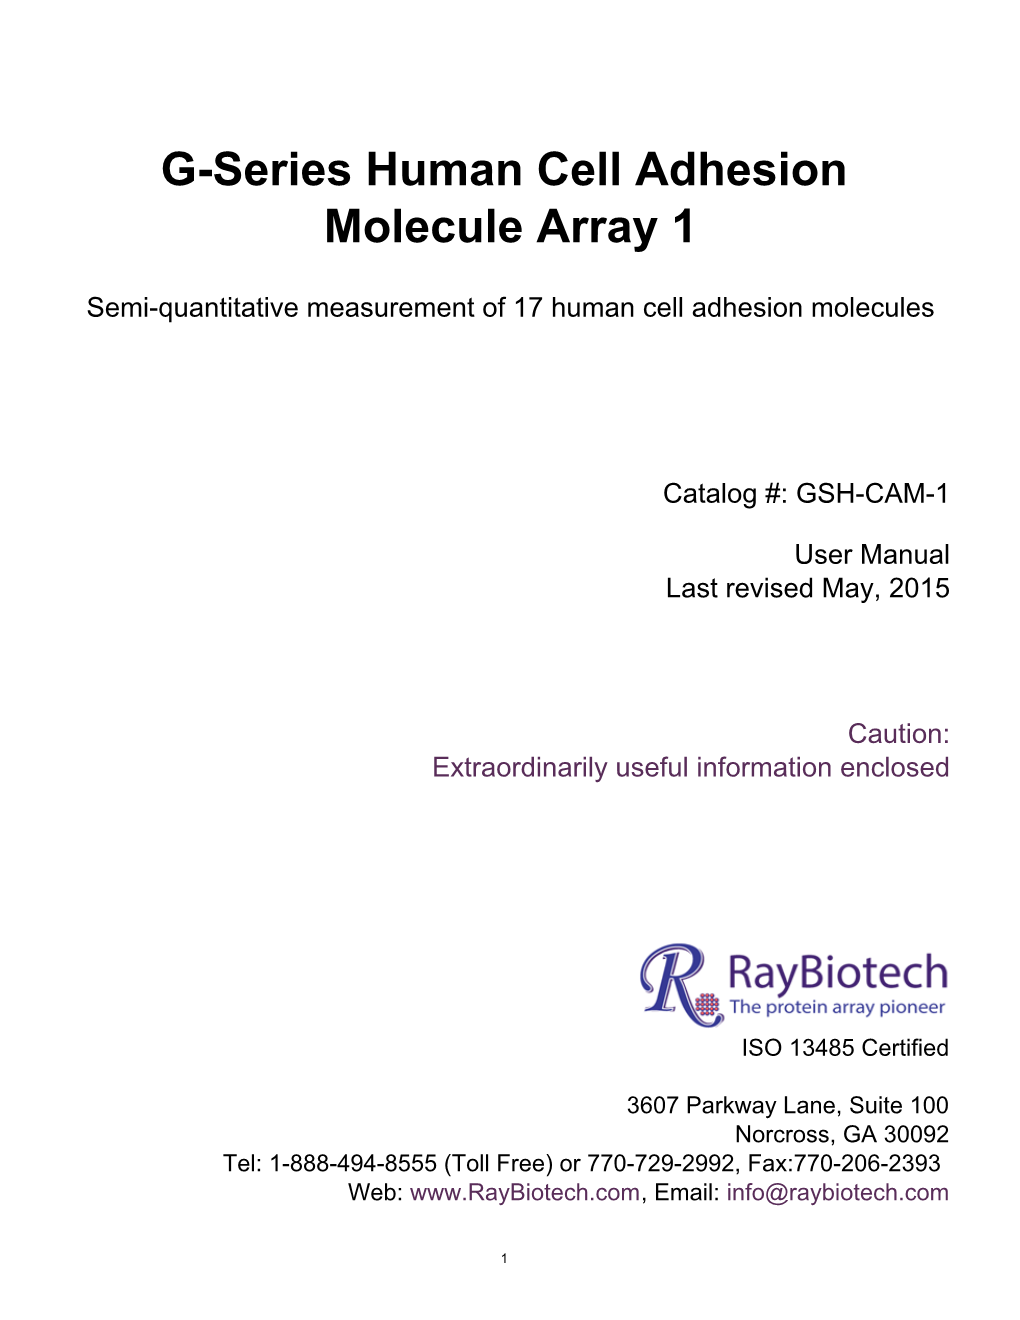 G-Series Human Cell Adhesion Molecule Array 1